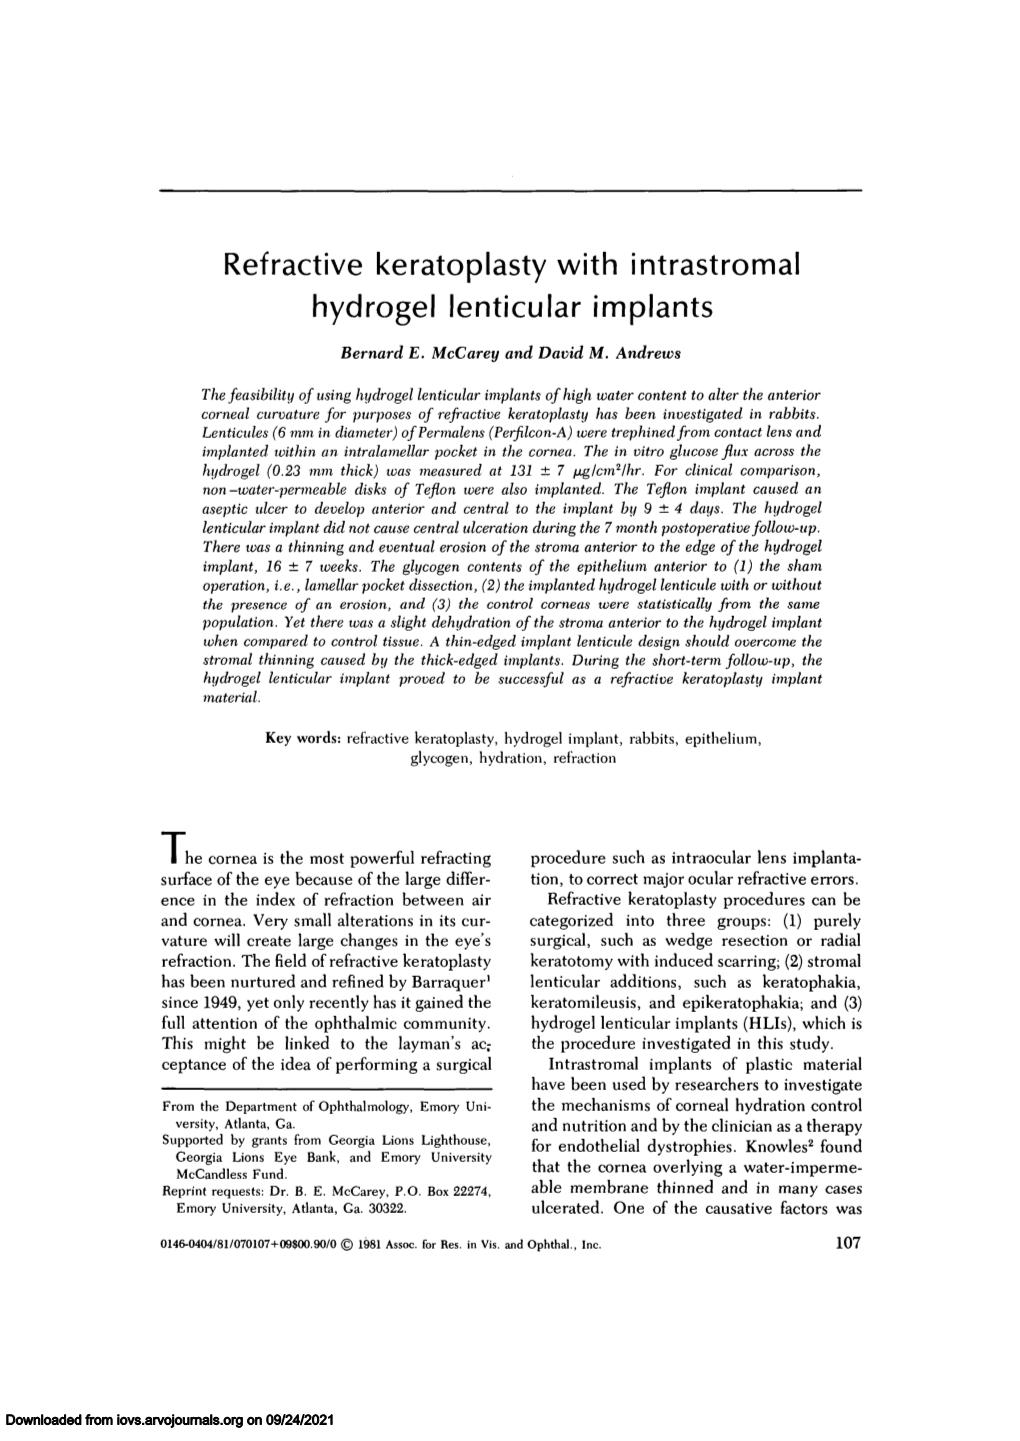 Refractive Keratoplasty with Intrastromal Hydrogel Lenticular Implants